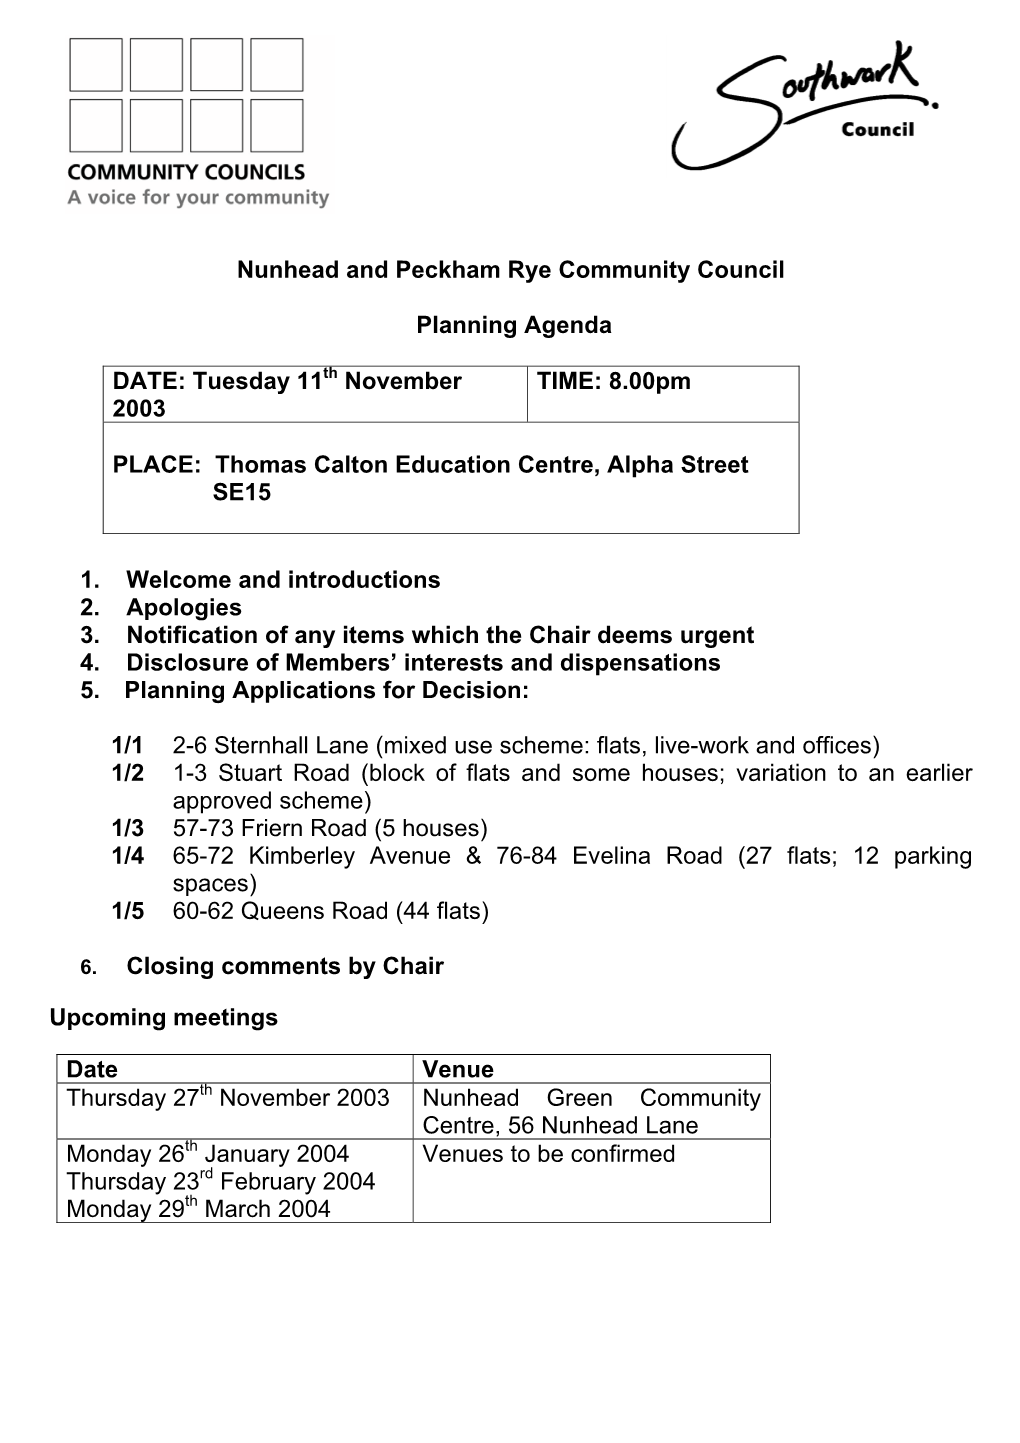 Nunhead and Peckham Rye Community Council Planning